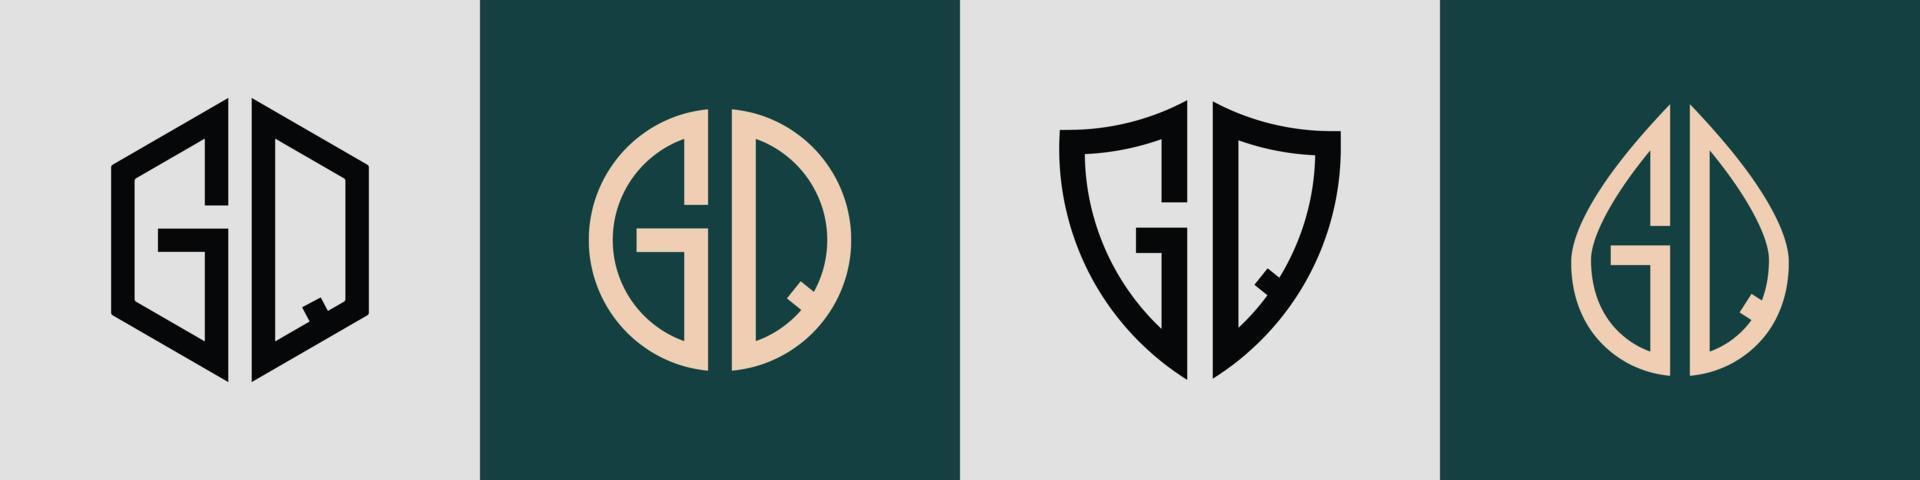 kreativ einfach Initiale Briefe gq Logo Designs bündeln. vektor